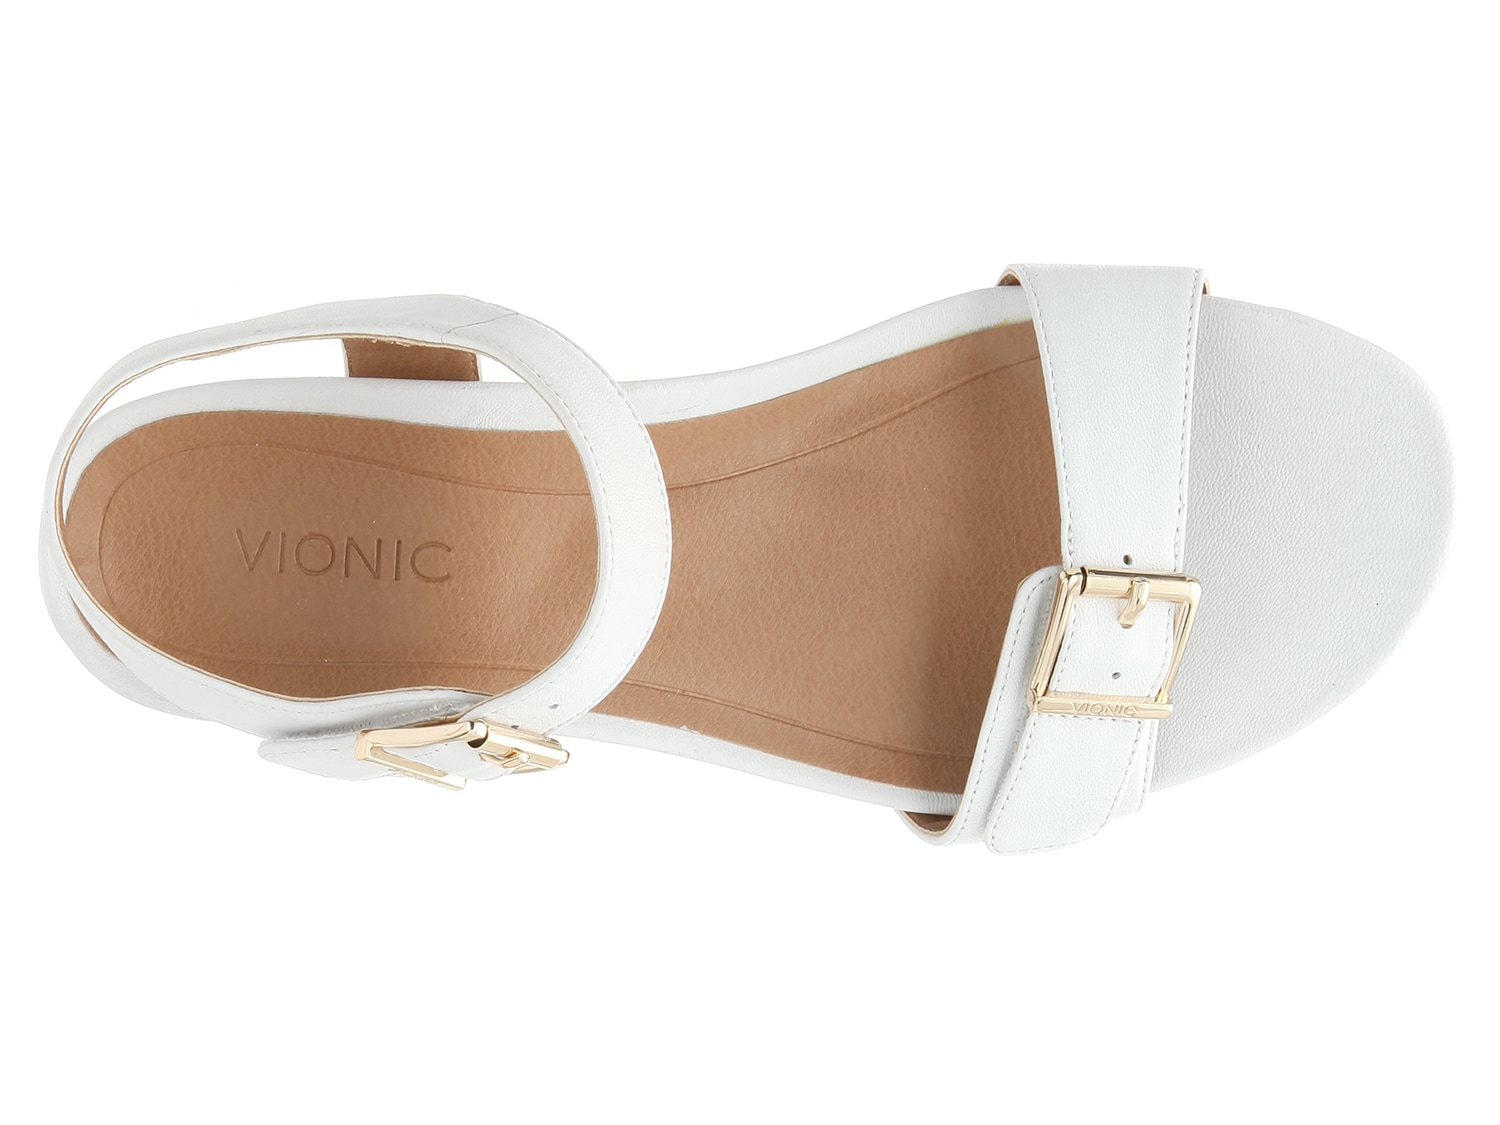 vionic frances wedge sandal